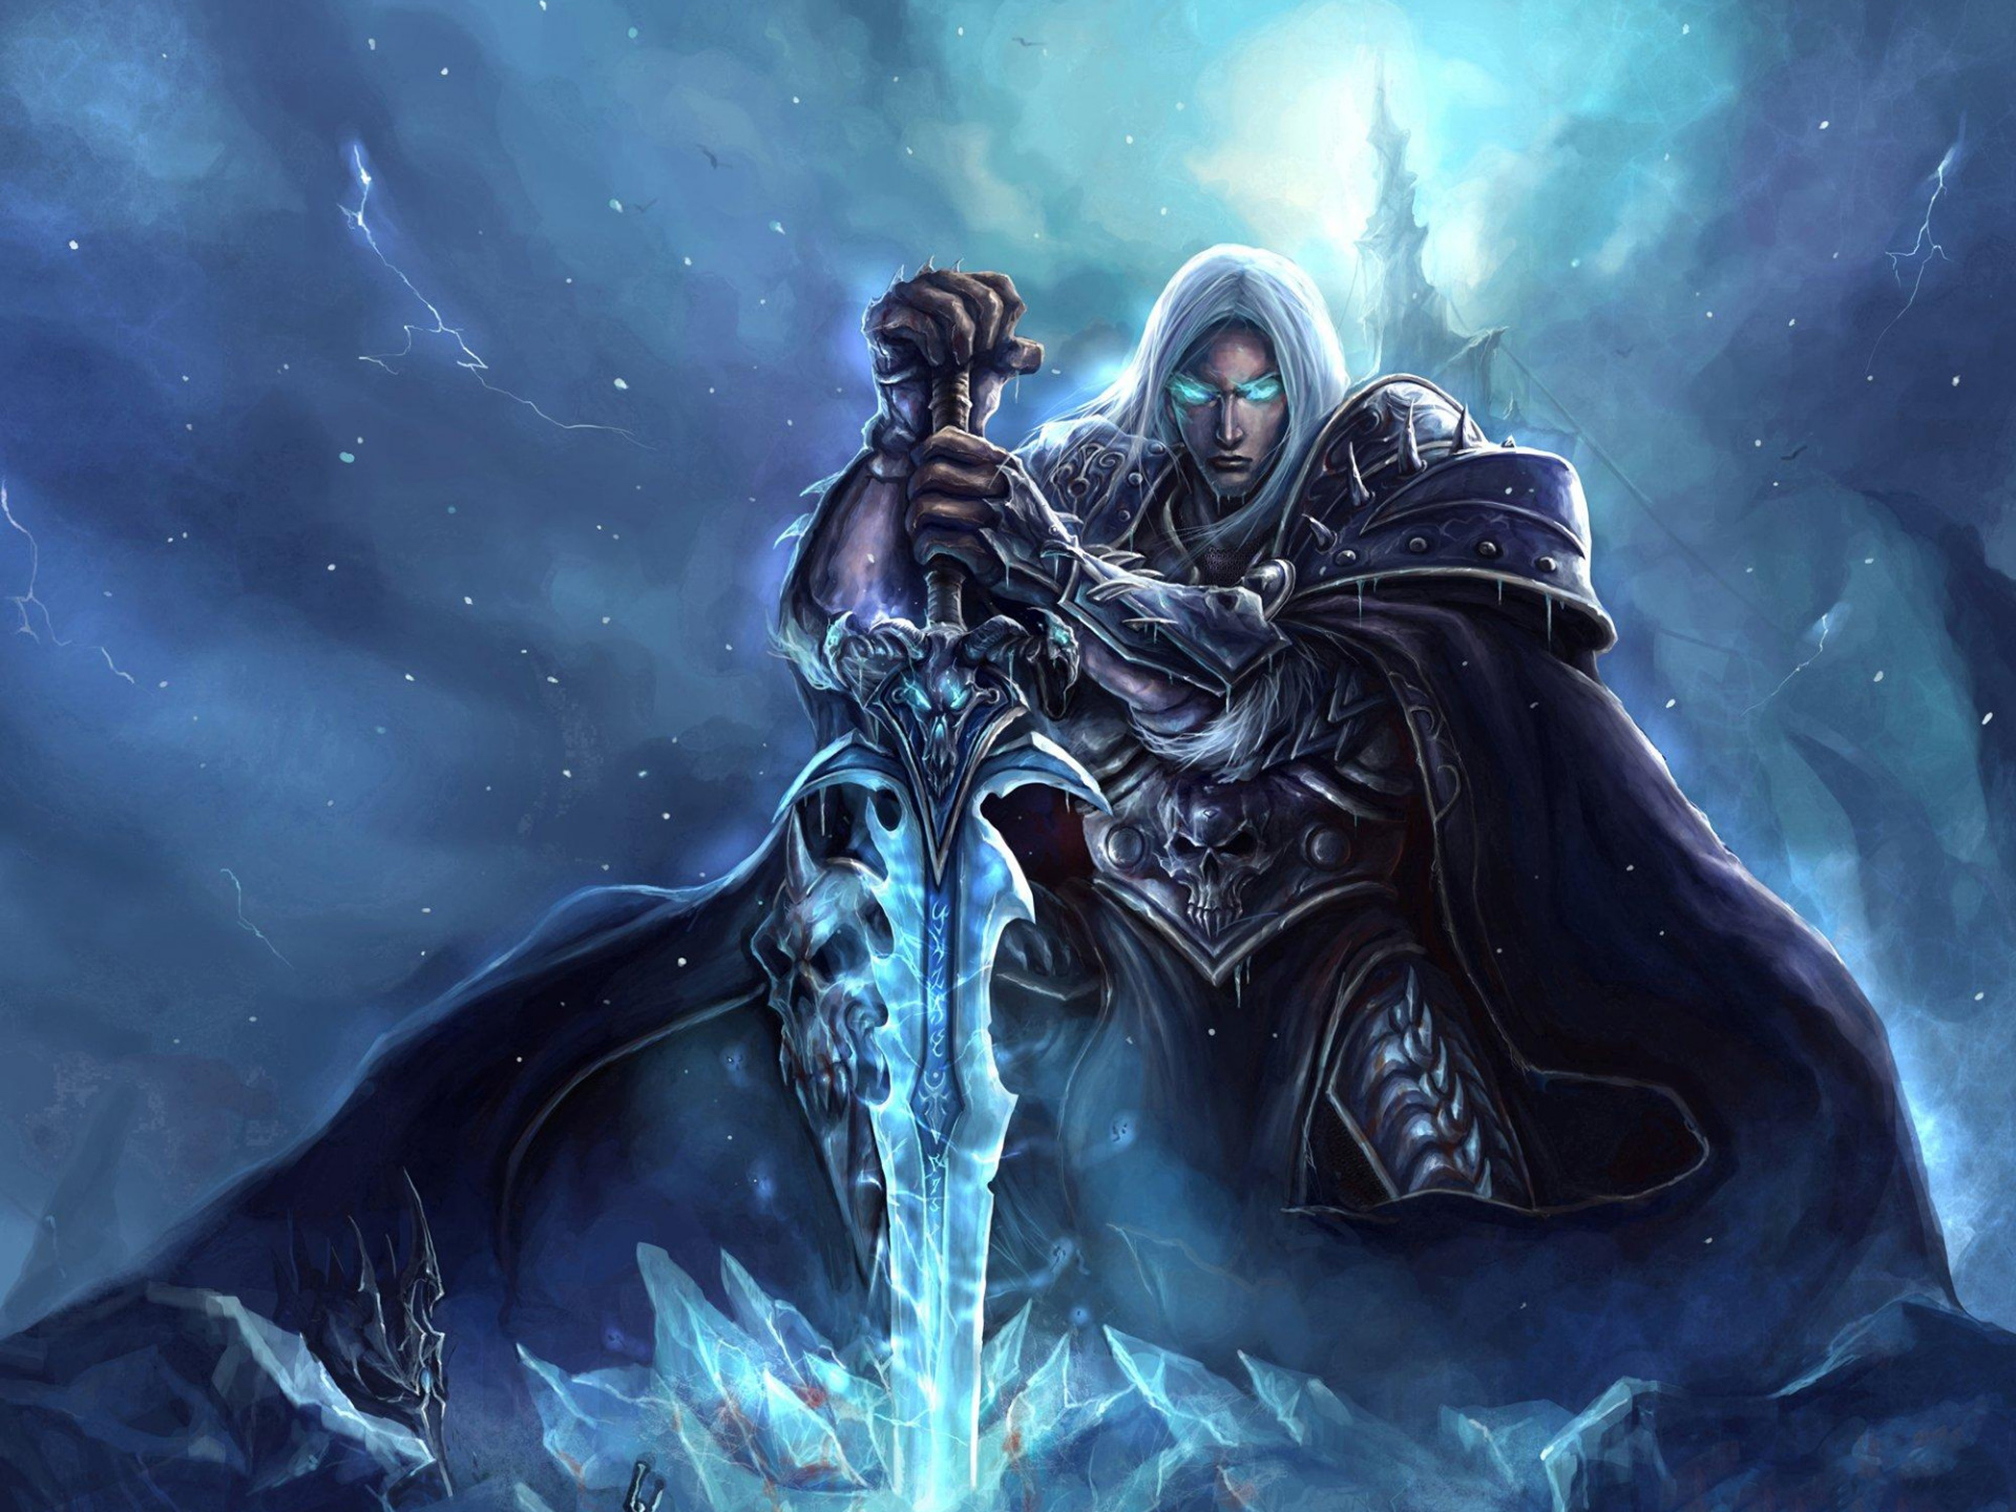 Arthas Menethil painting - view more World of Warcraft artwork